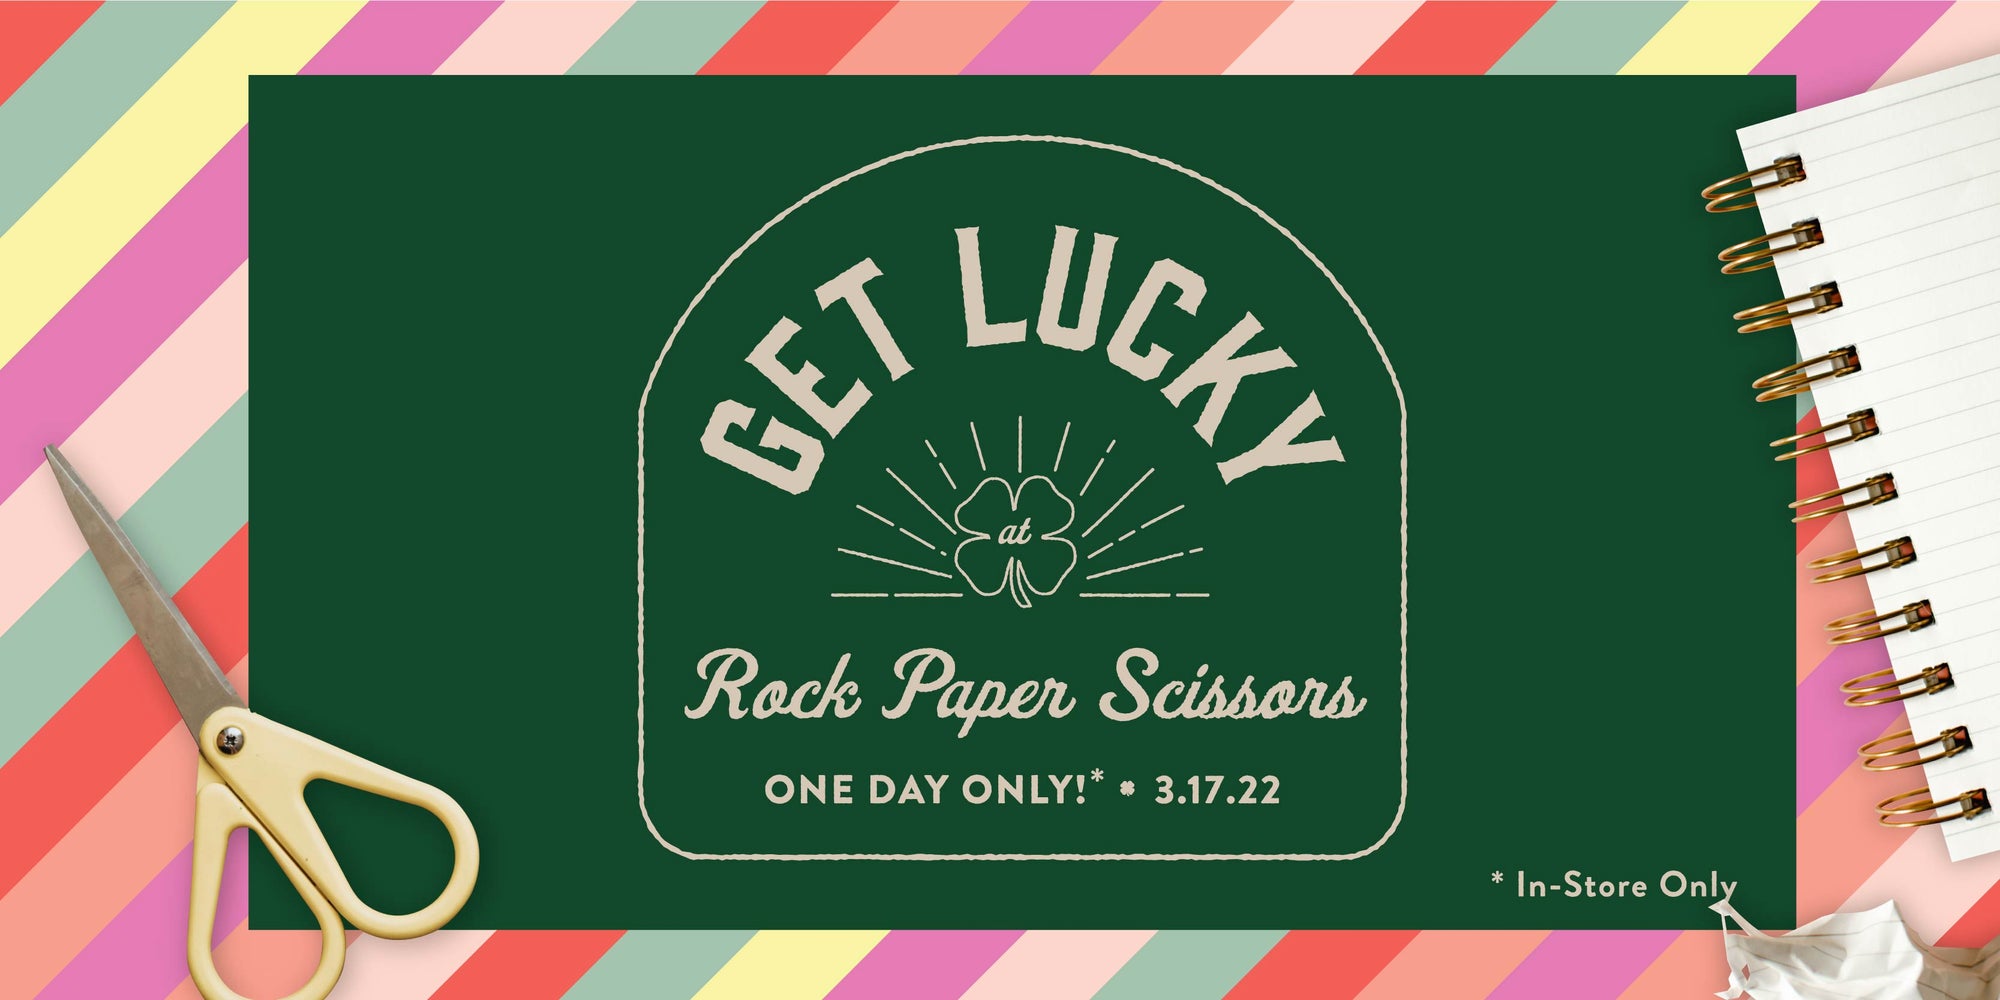 Get Lucky at Rock Paper Scissors!